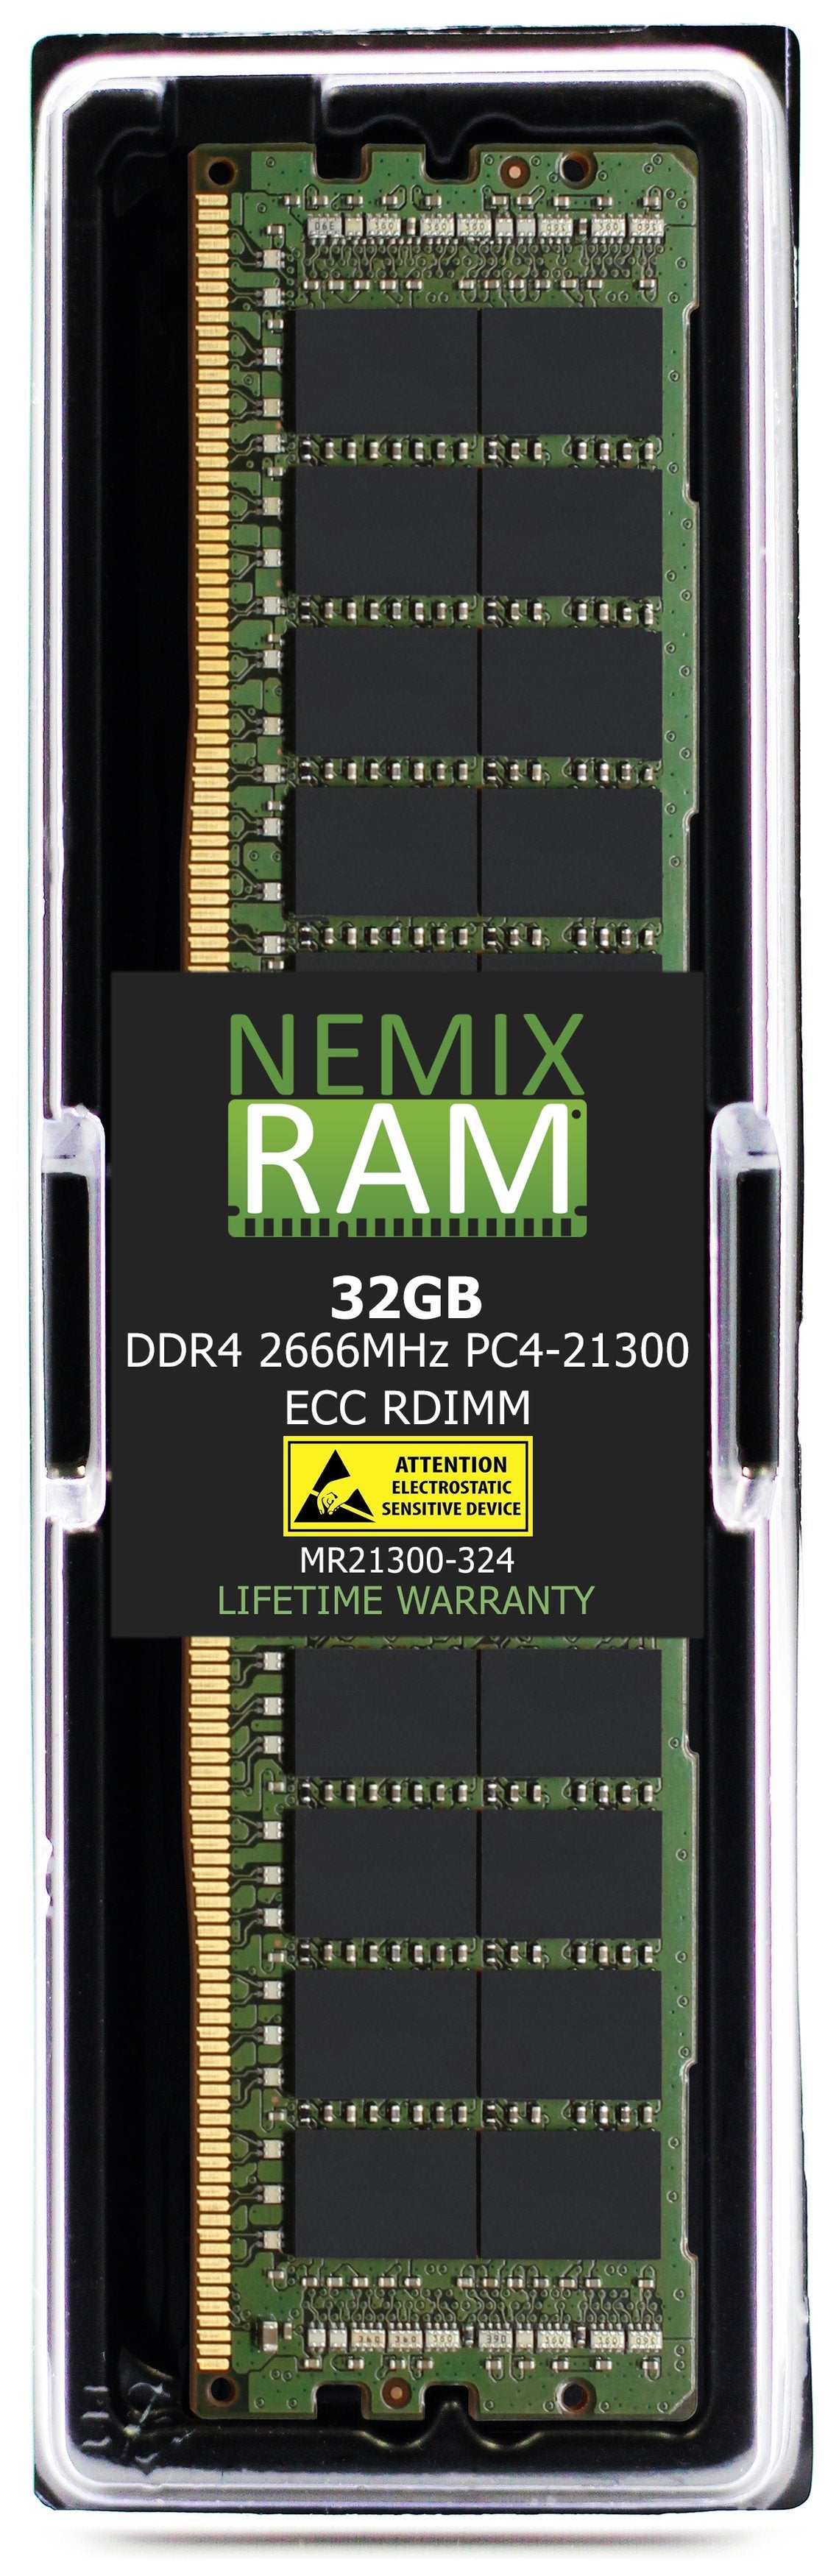 32GB DDR4 2666MHZ PC4-21300 RDIMM Compatible with Supermicro MEM-DR432L-HL01-ER26